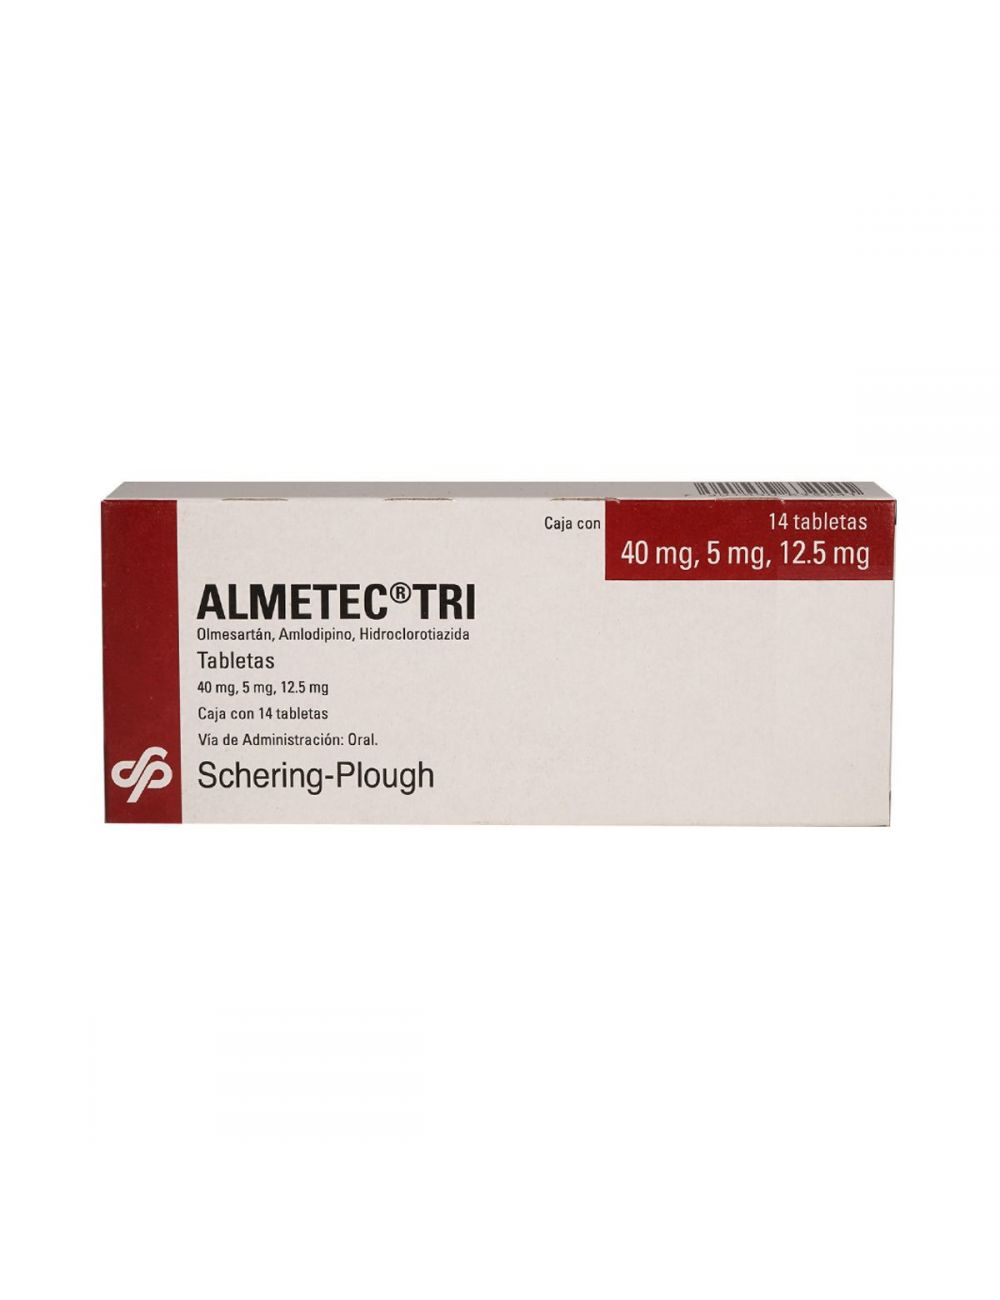 Almetec Tri 40mg/5mg/12.5mg Caja con 14 tabletas